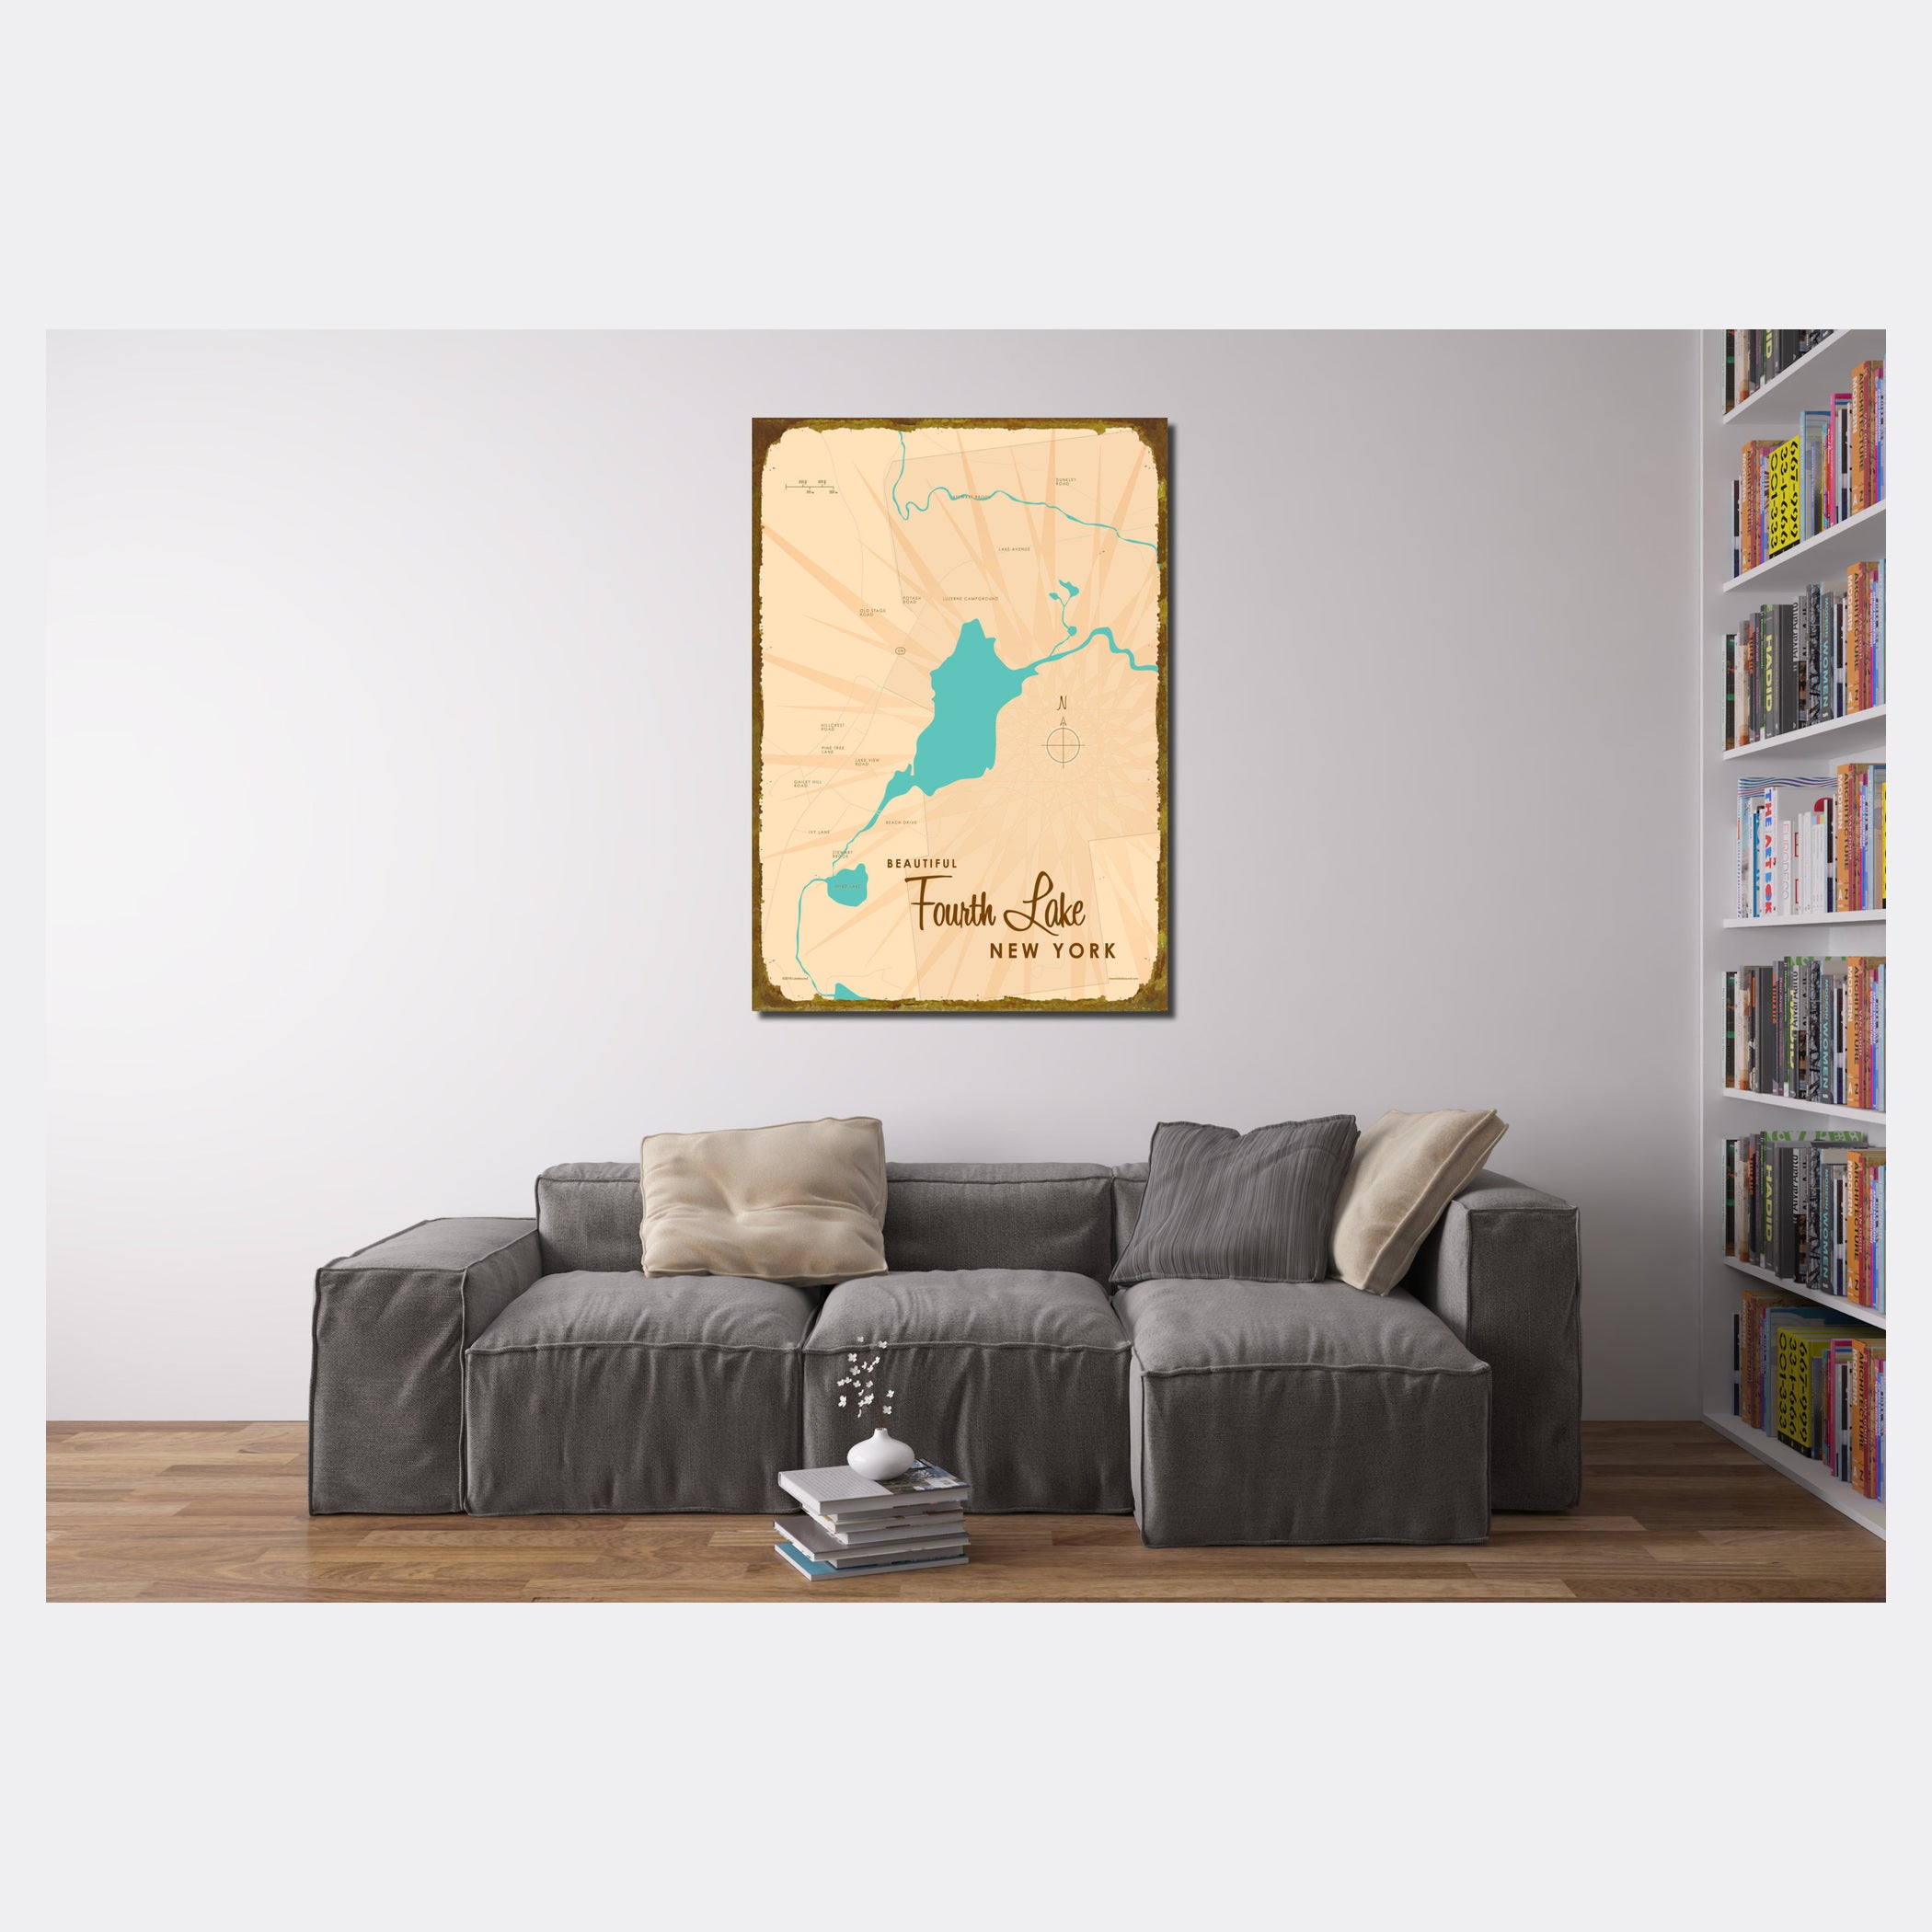 Fourth Lake NY (Warren County), Sign Map Art